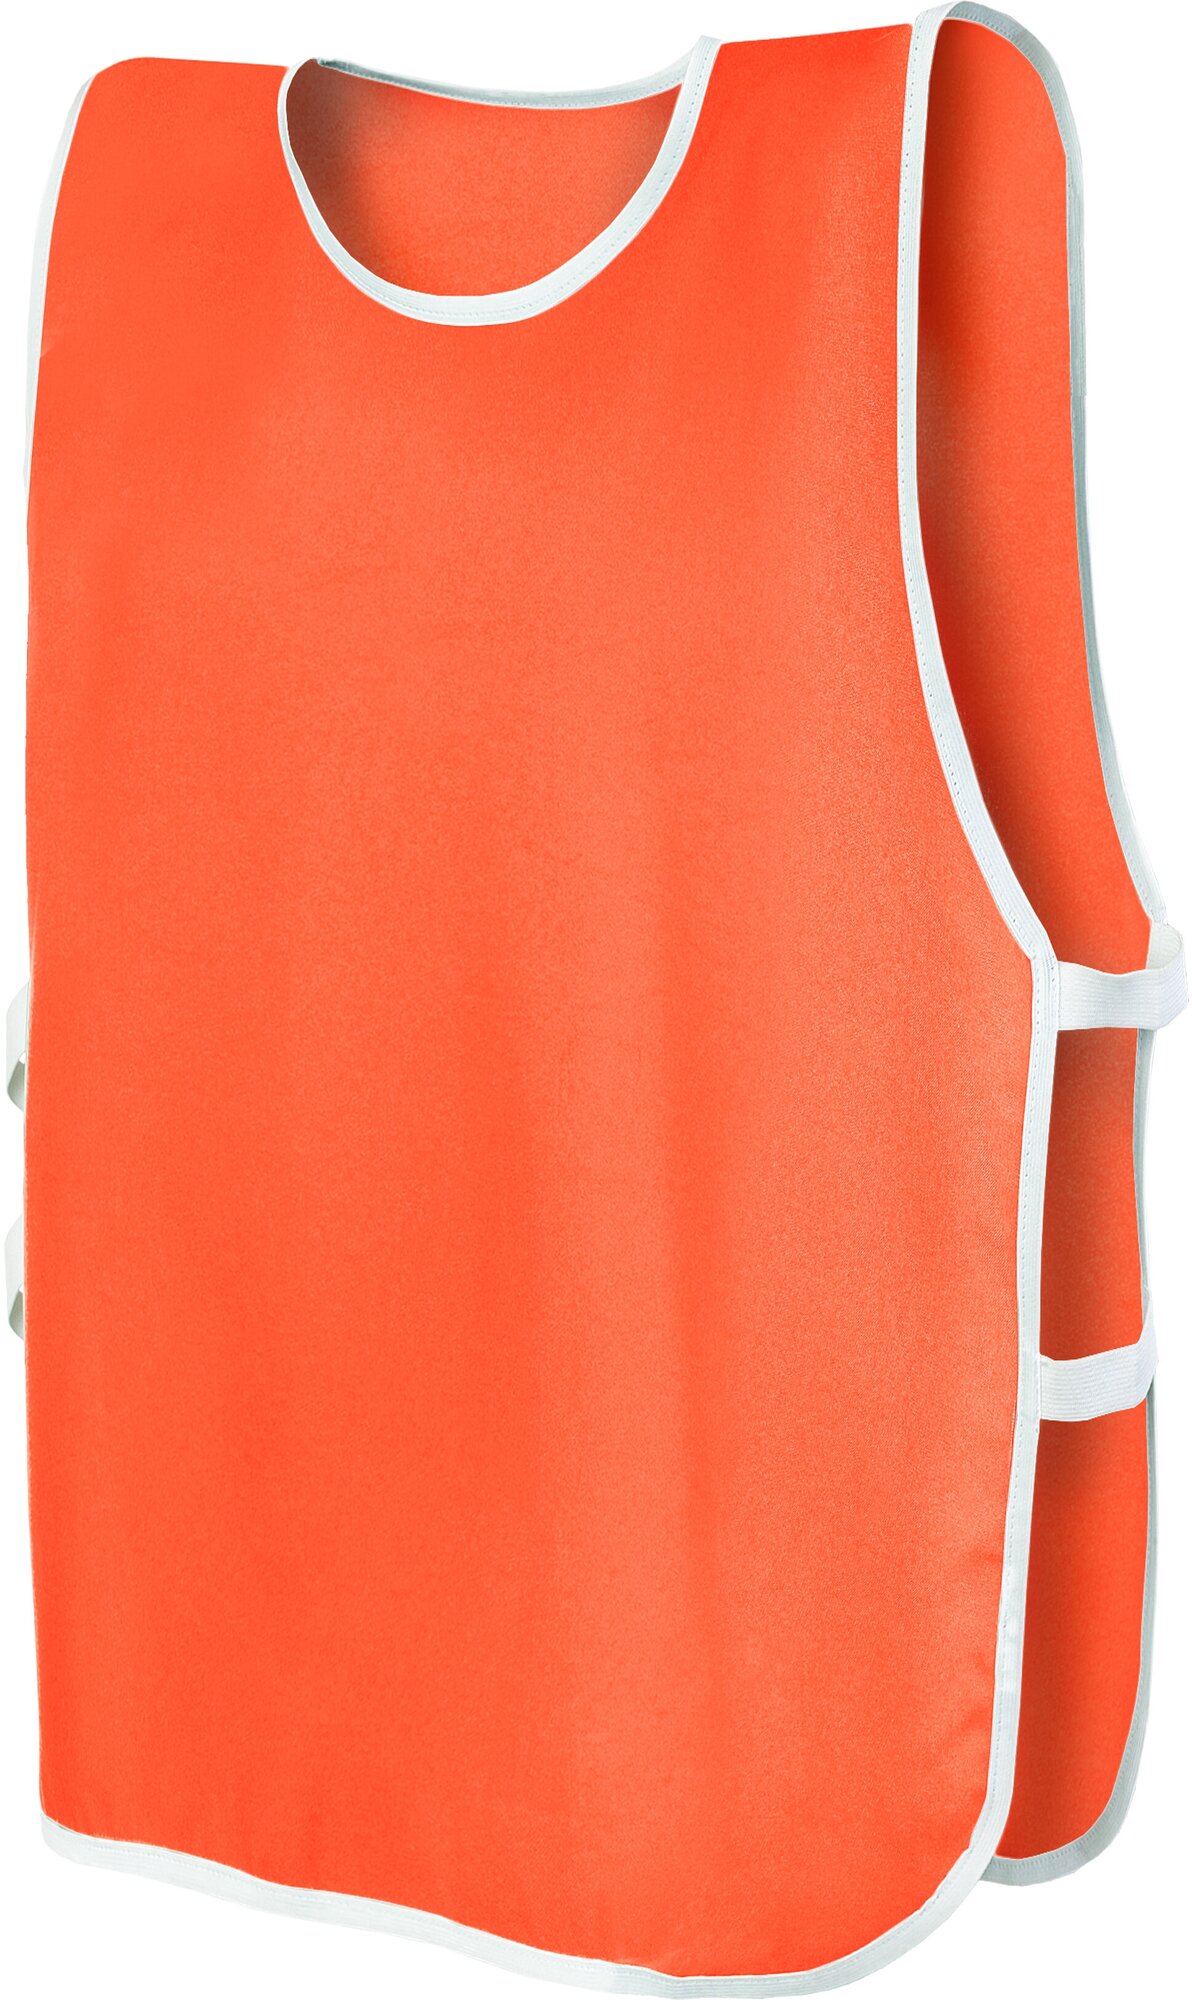 Футбольная манишка оранжевая, размер L/XL